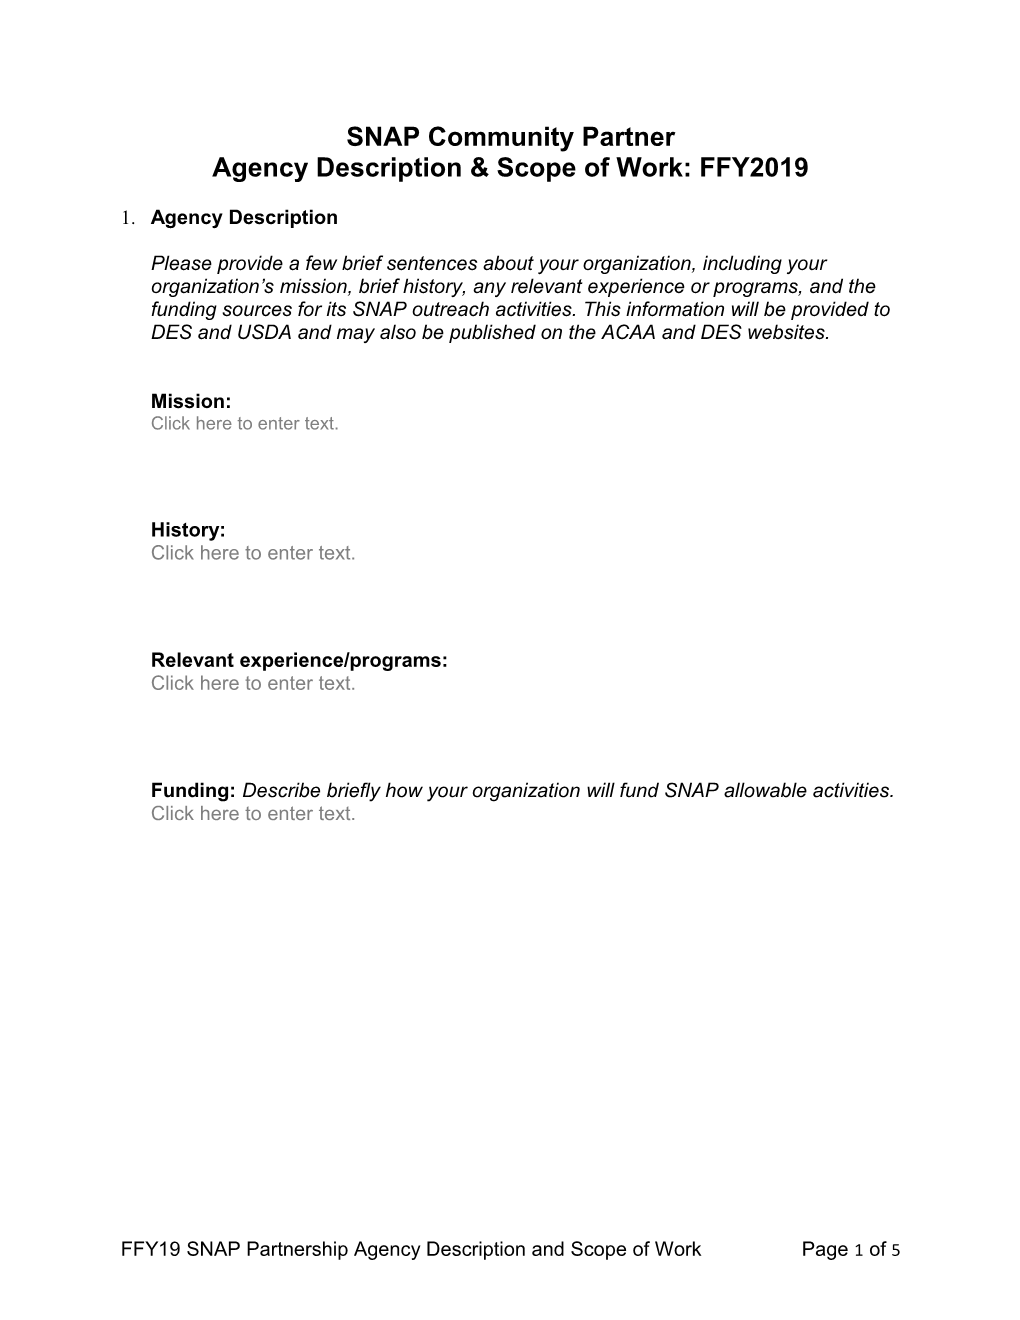 SNAP Community Partner Agency Description & Scope of Work: FFY2019